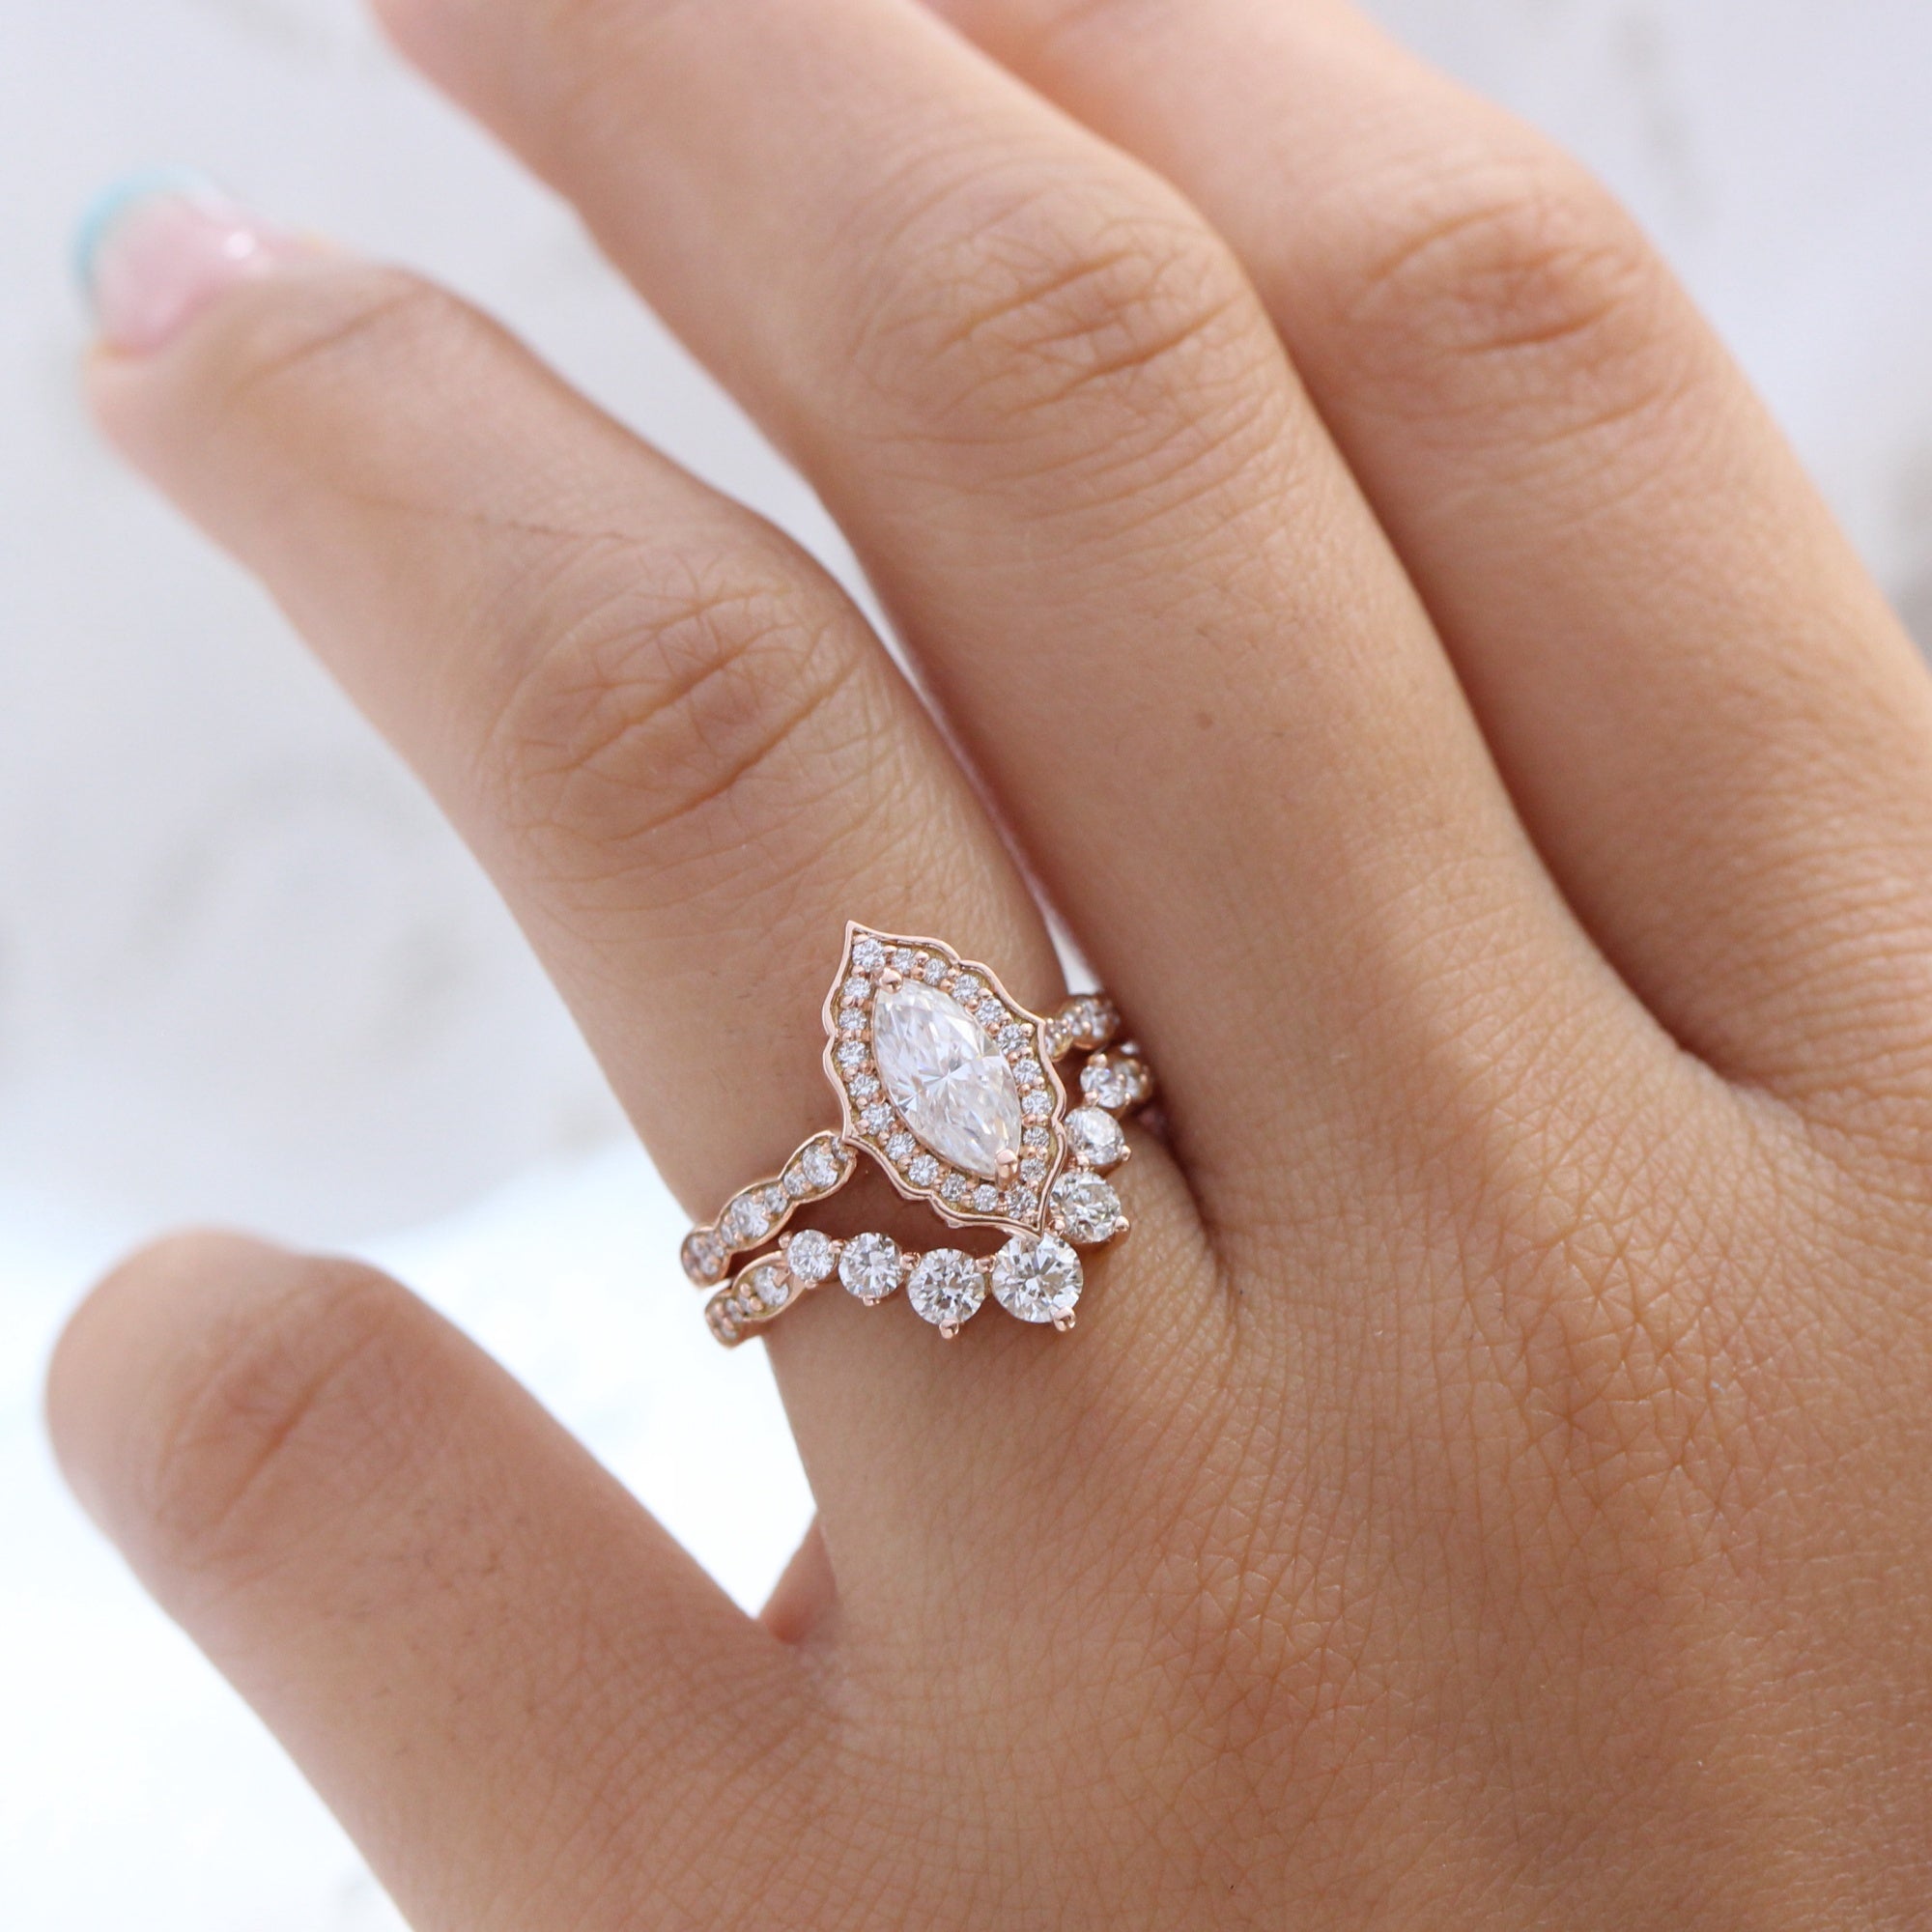 Vintage marquise moissanite ring rose gold large 7 diamond u shaped wedding band stacking rings la more design jewelry